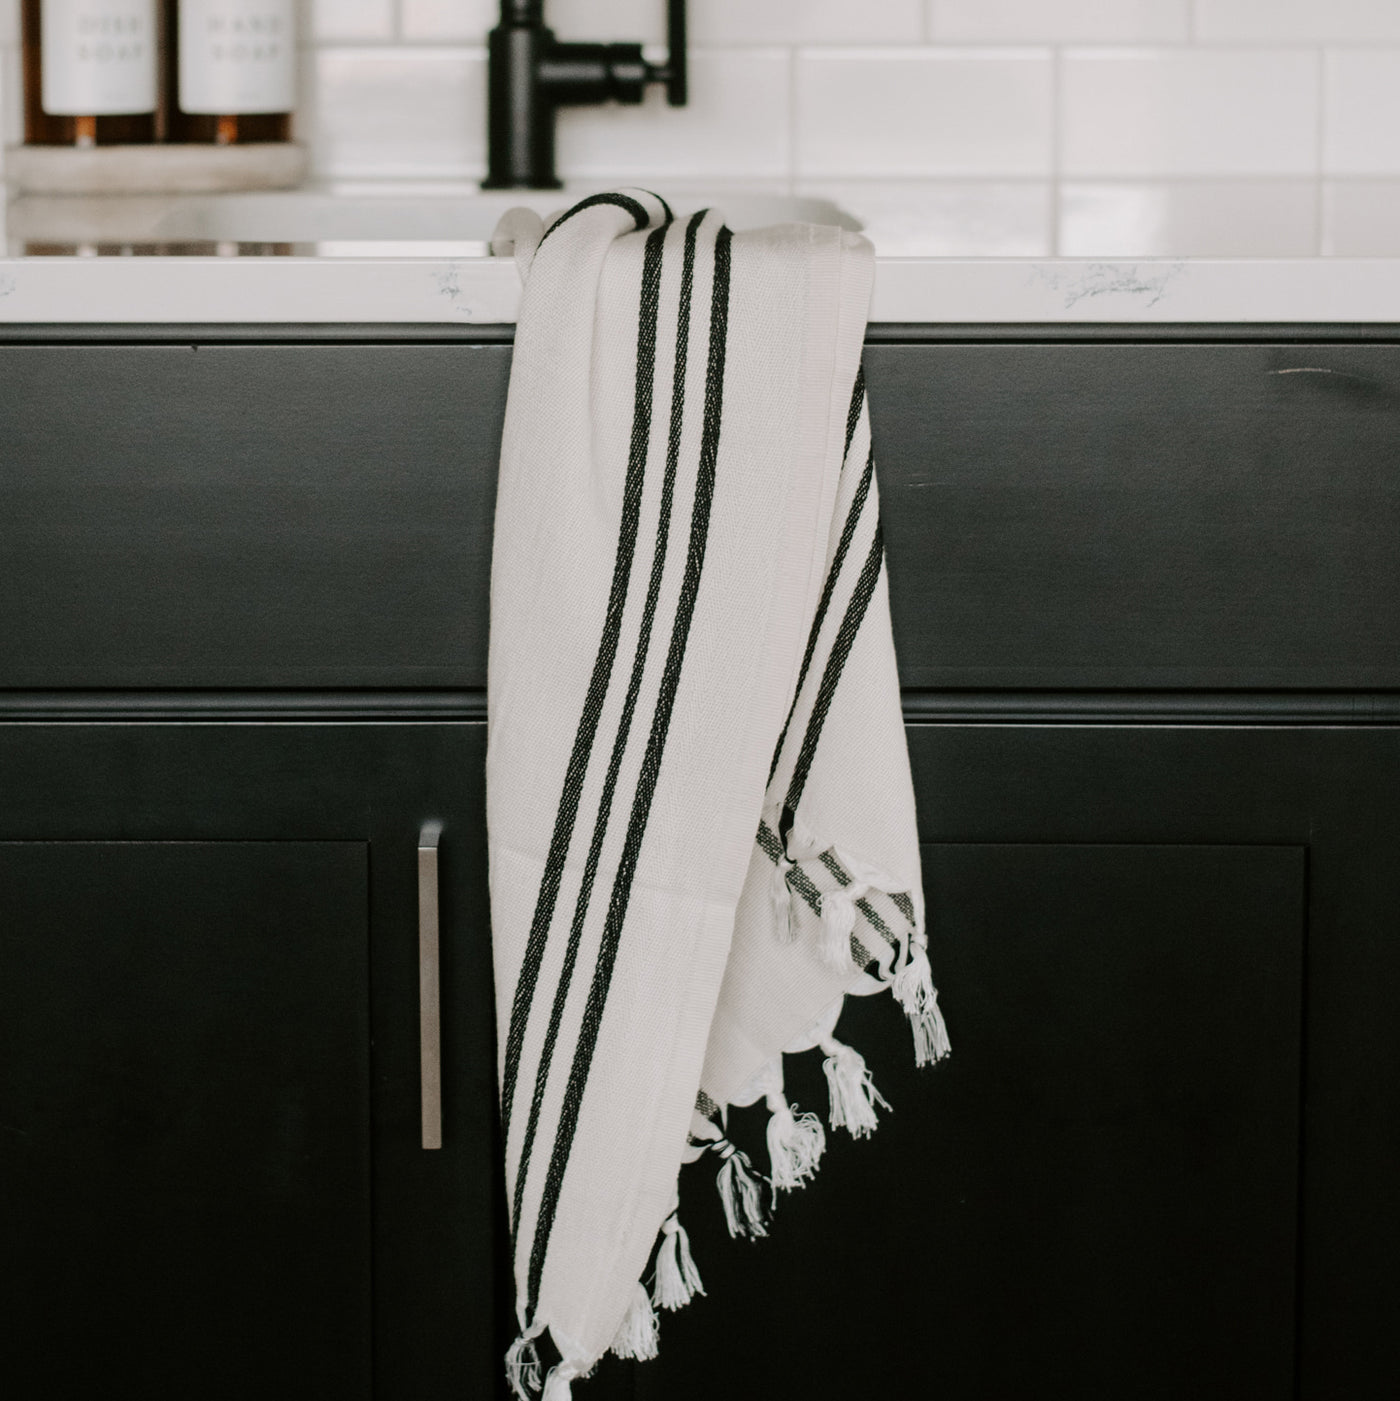 Sweet Water Decor Jordan Turkish Hand Towel Black Two Stripe - 19x35